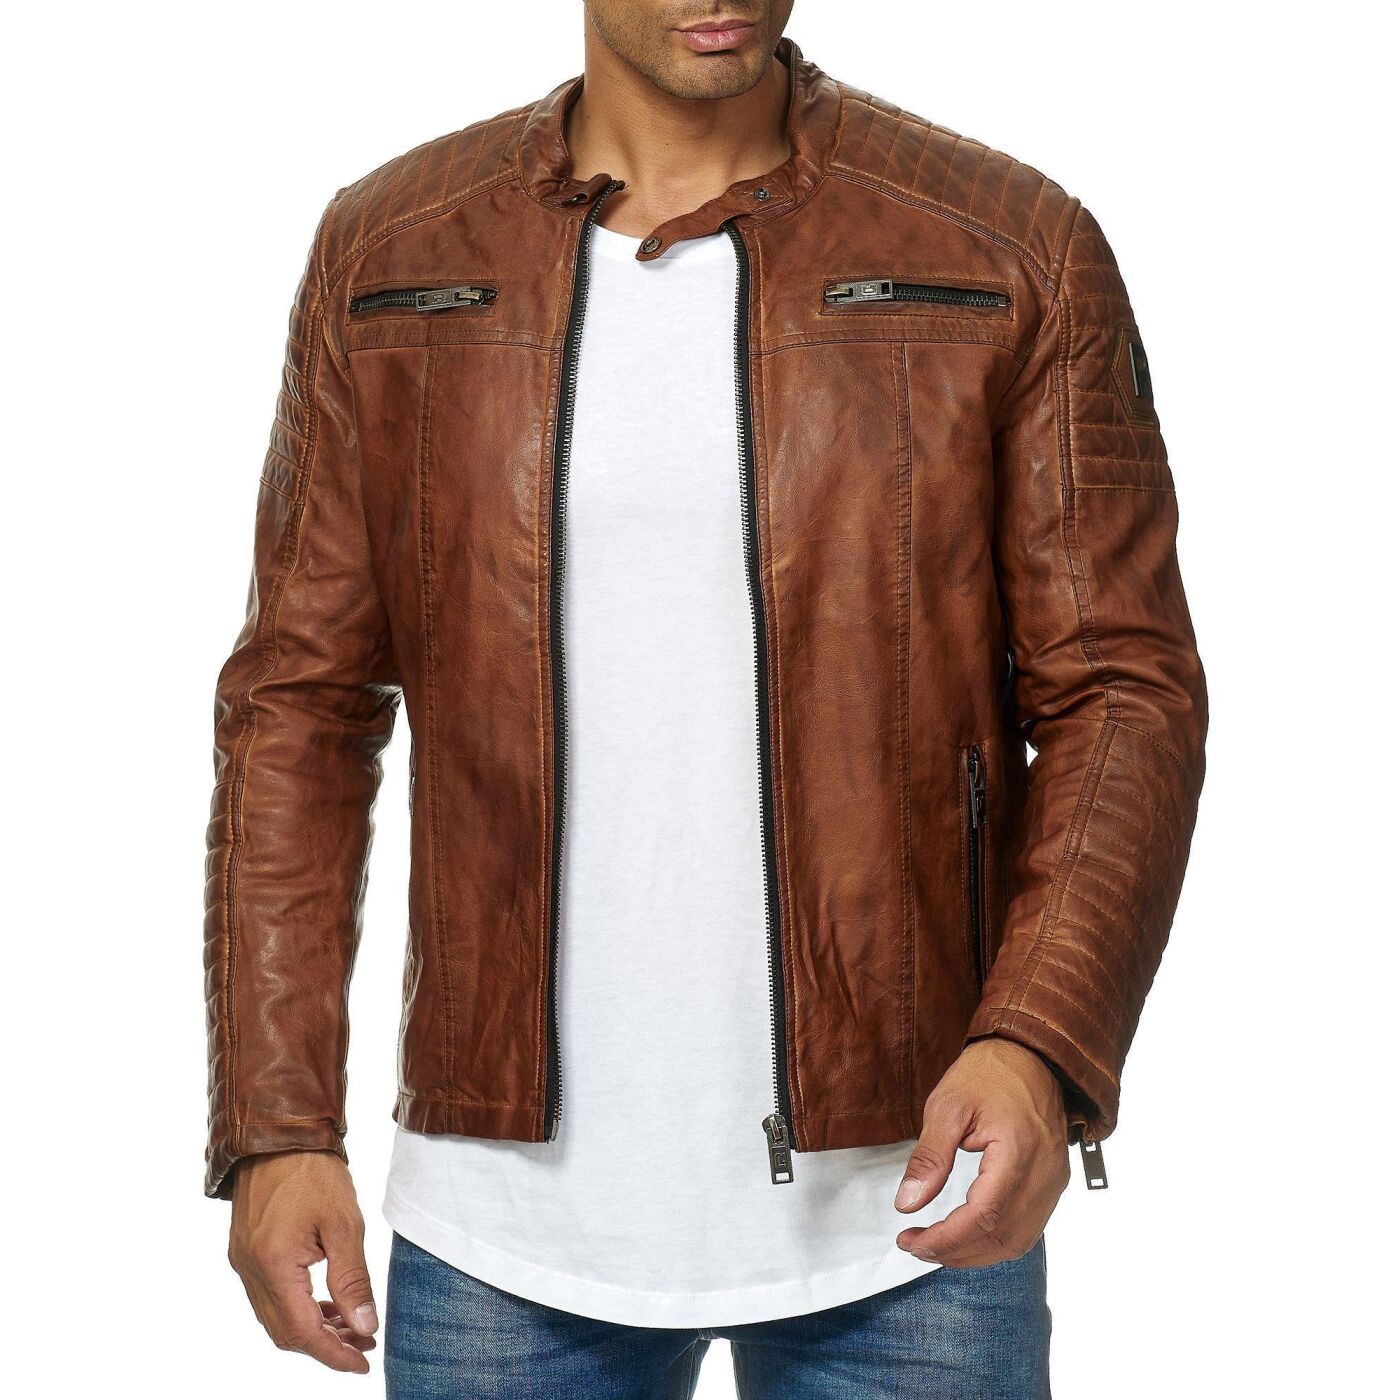 Yellow Leather Jacket Mens Hot Sales, Save 56% | jlcatj.gob.mx